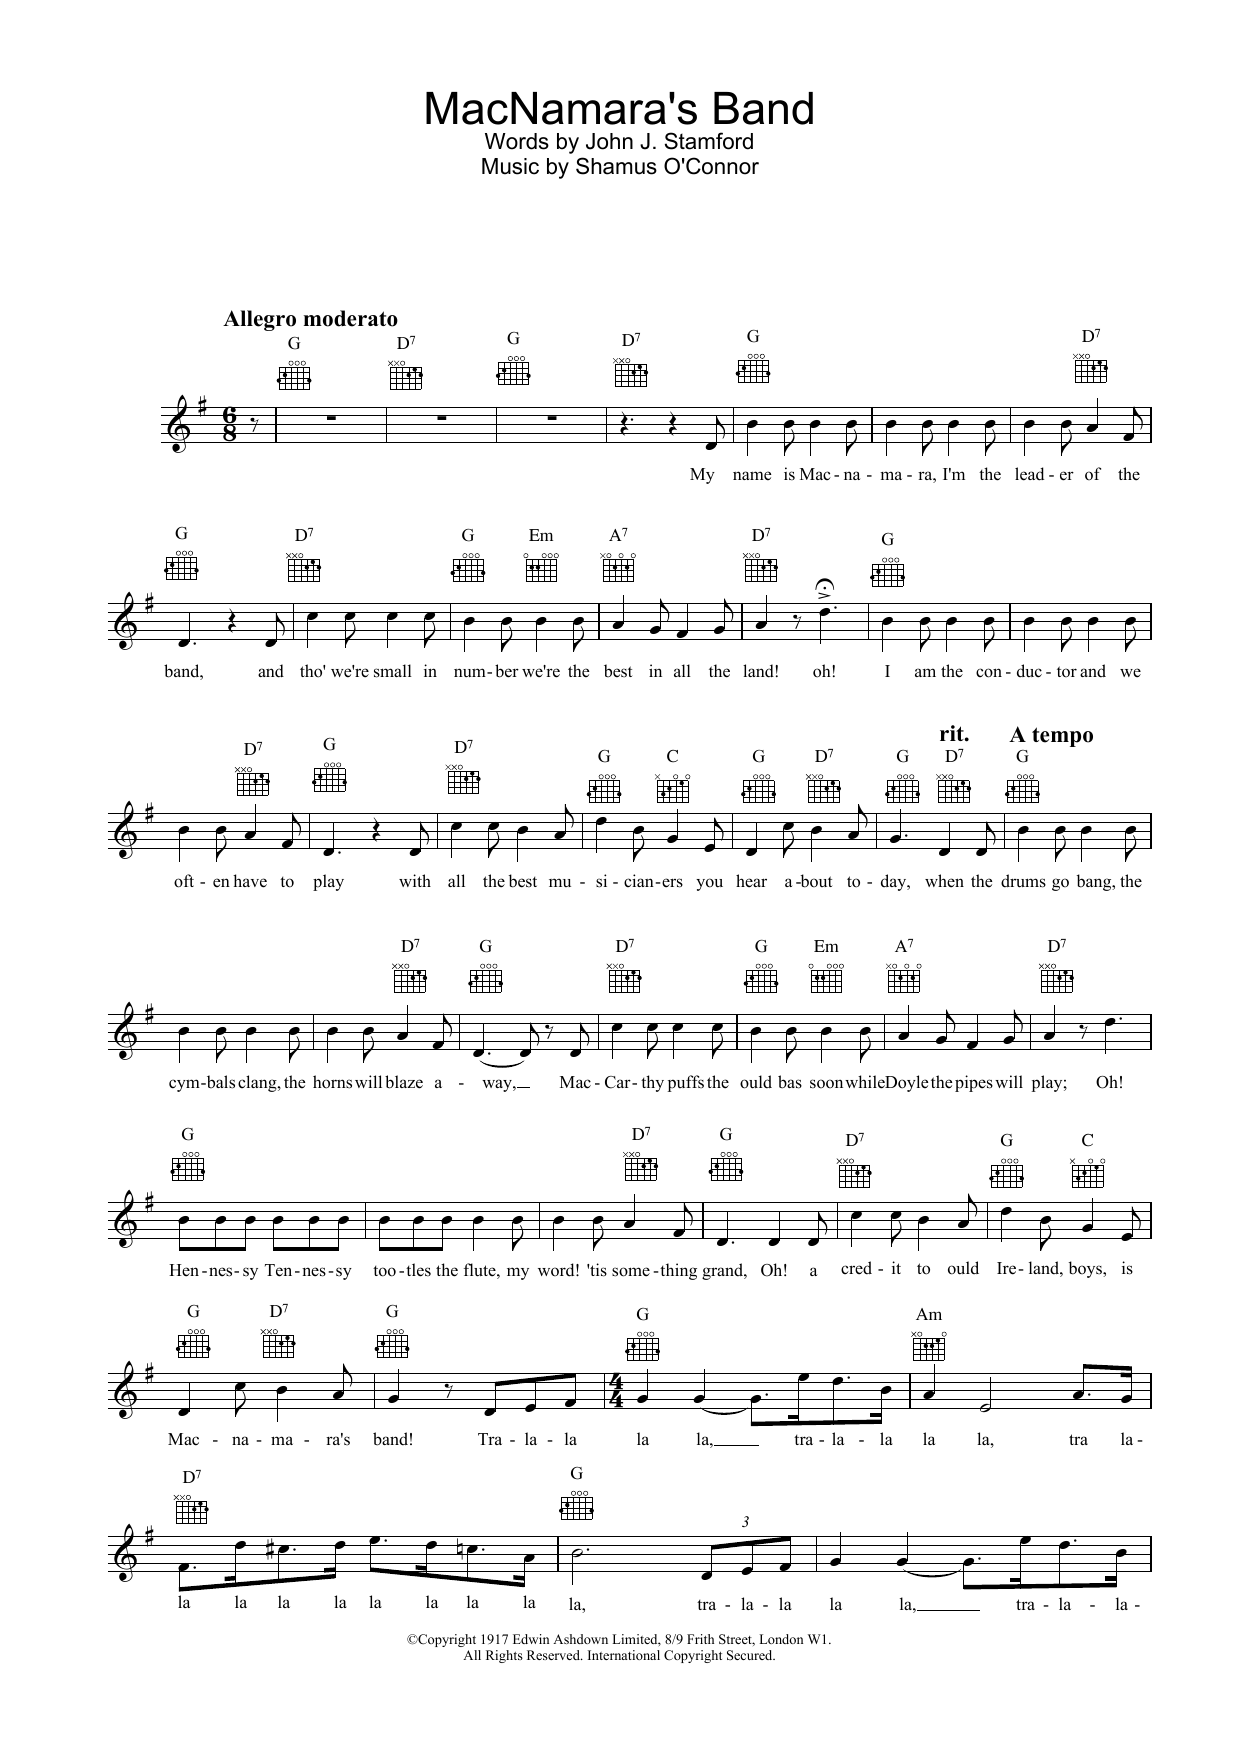 Download Bing Crosby MacNamara's Band Sheet Music